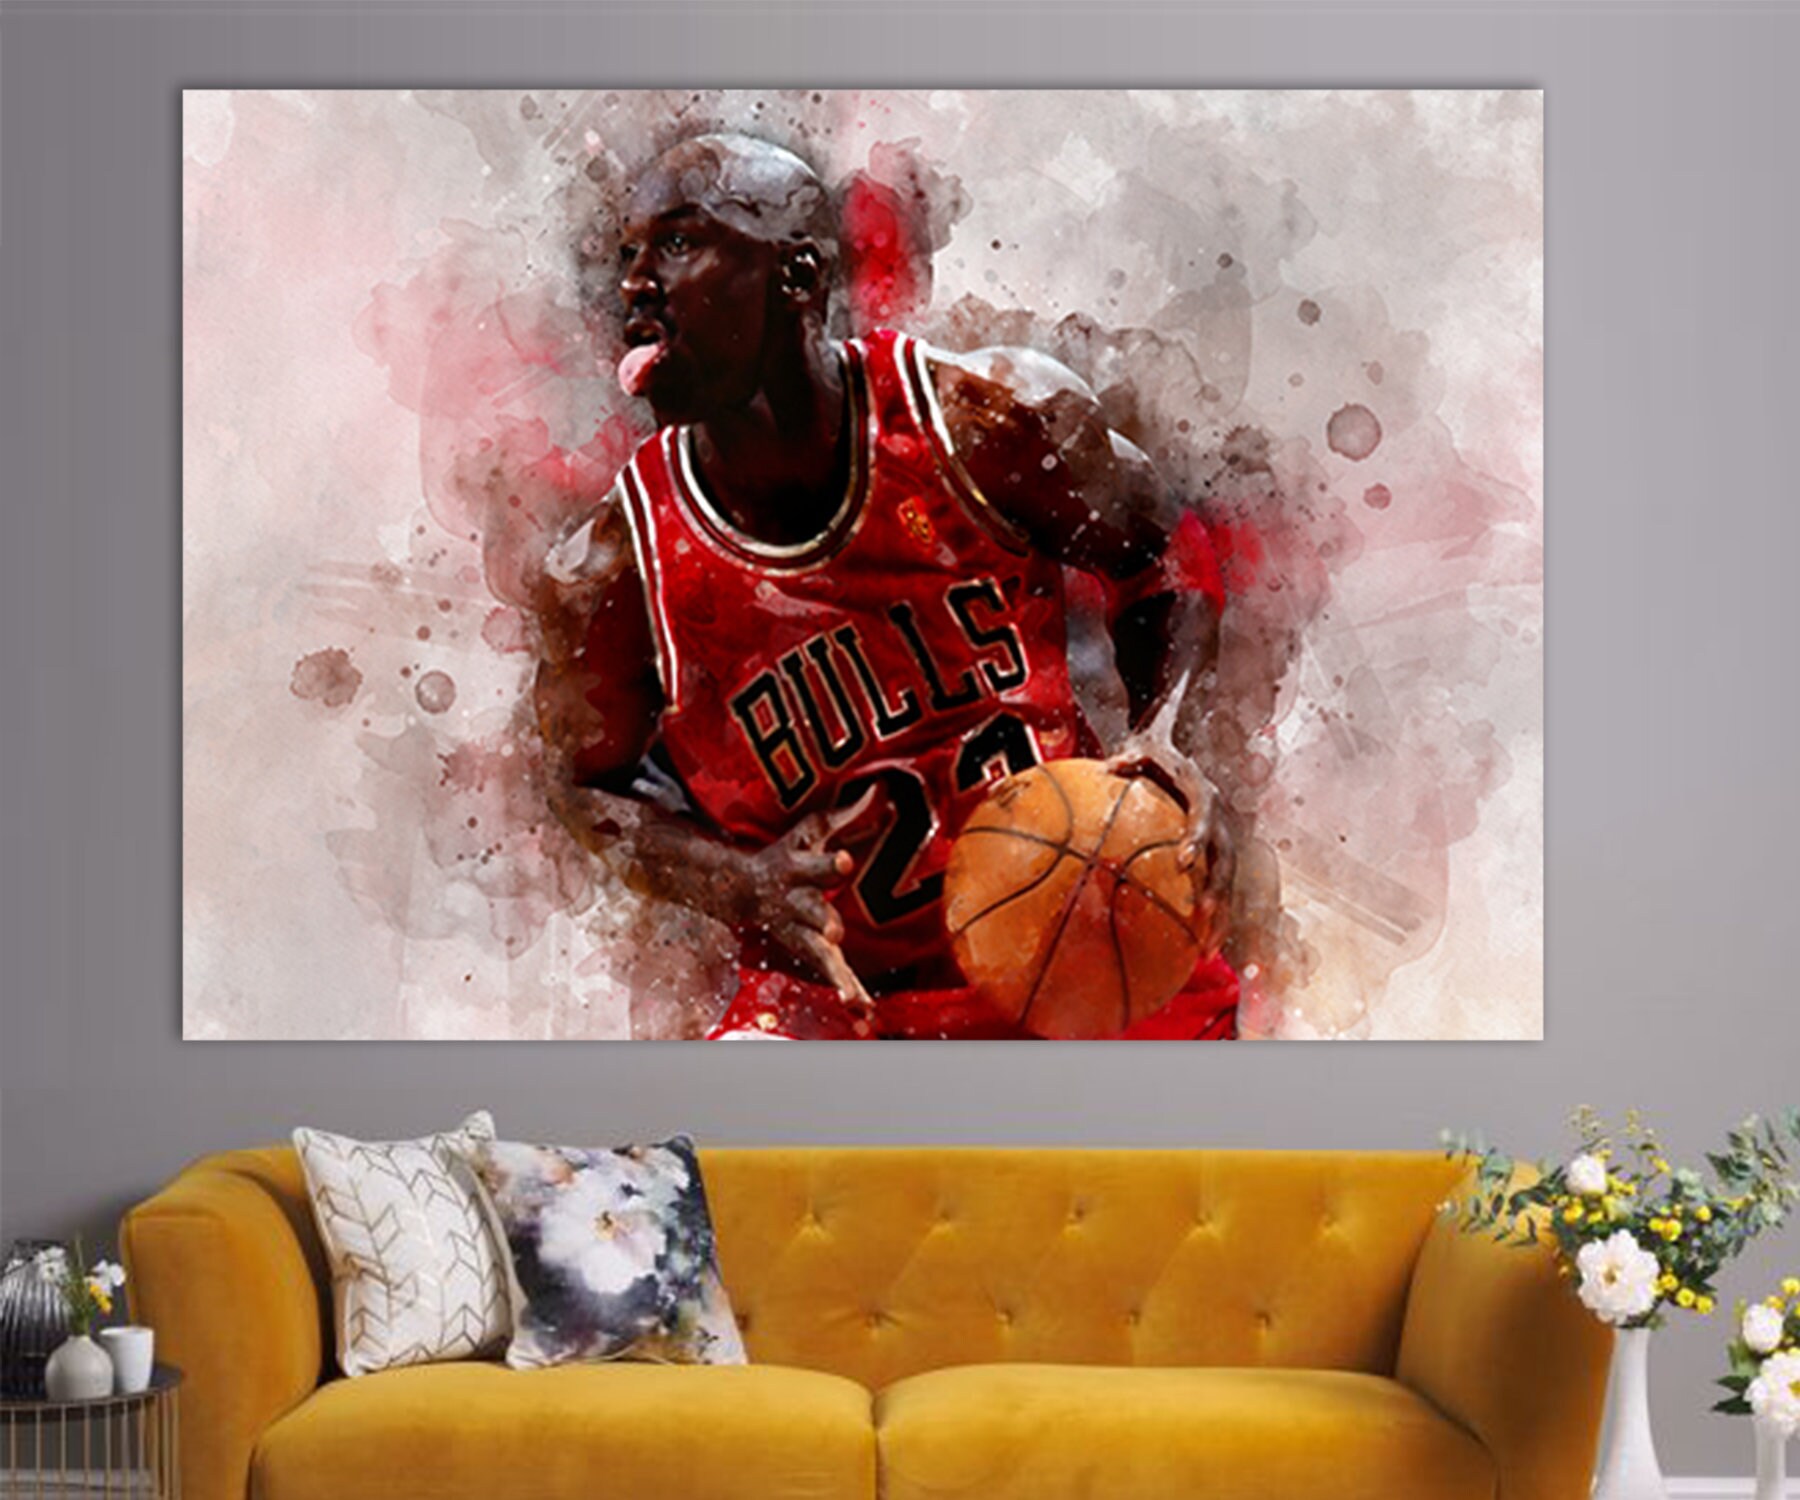 Michael Jordan Canvas Print, Michael Jordan Wall Art, Basketball Wall Art, Basketball Fan Gift, Michael Jordan Poster